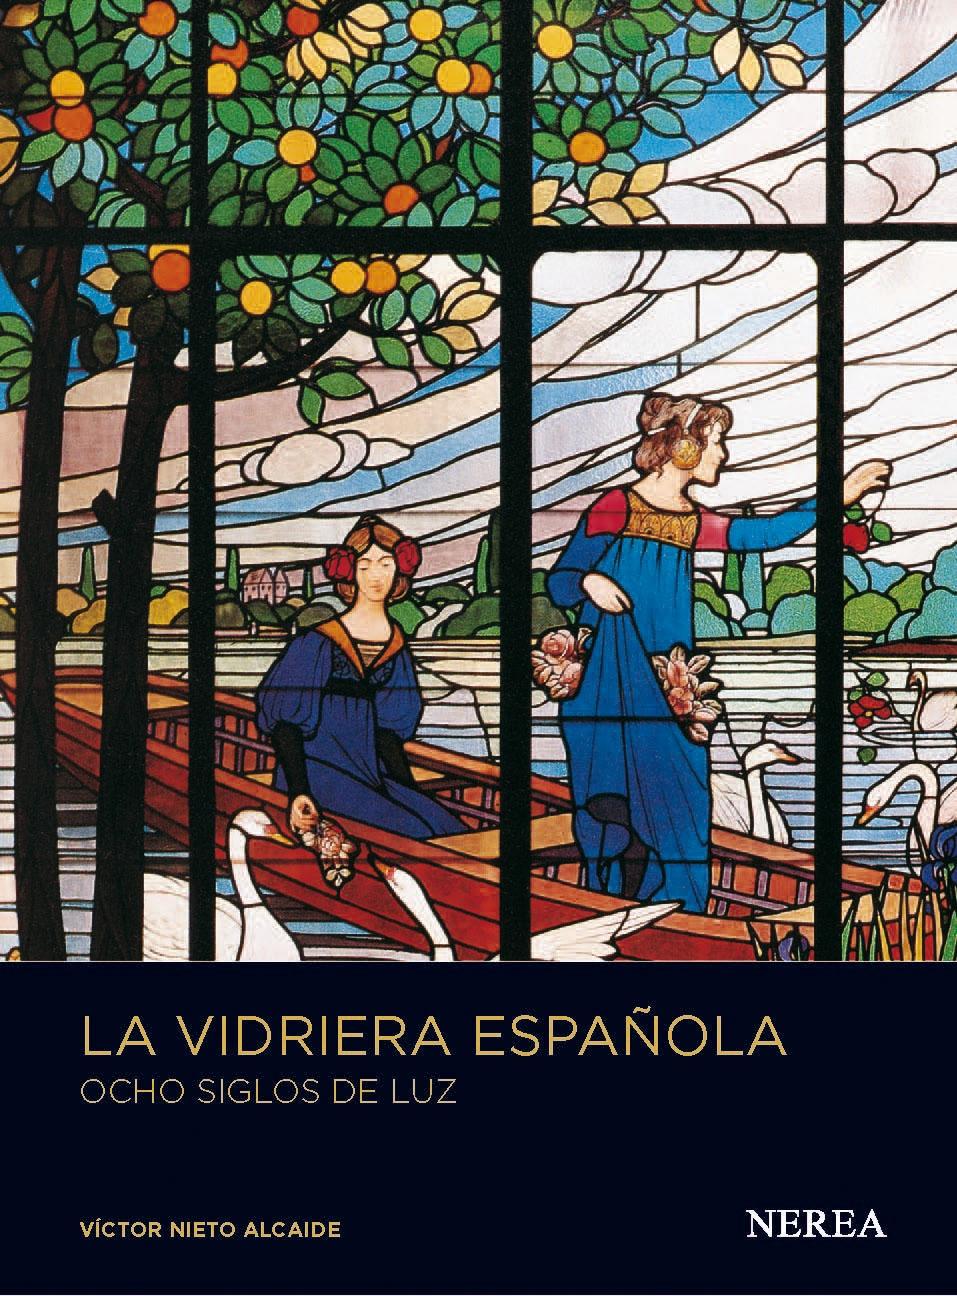 La Vidriera española "Ocho siglos de luz"